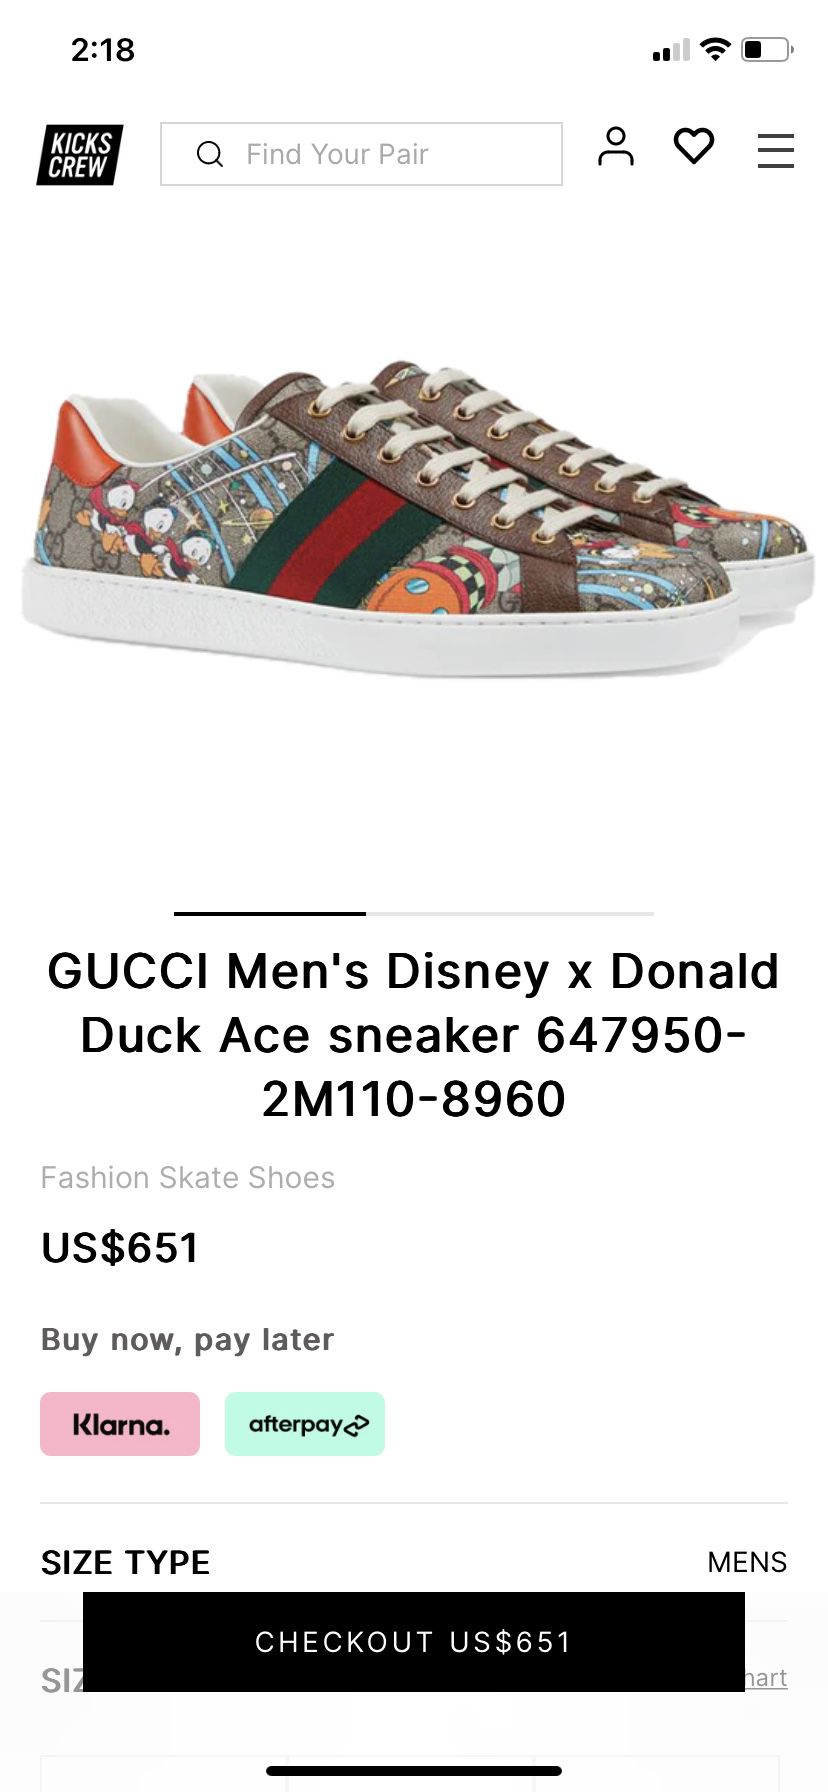 GUCCI Men's Disney x Donald Duck Ace sneaker 647950-2M110-8960